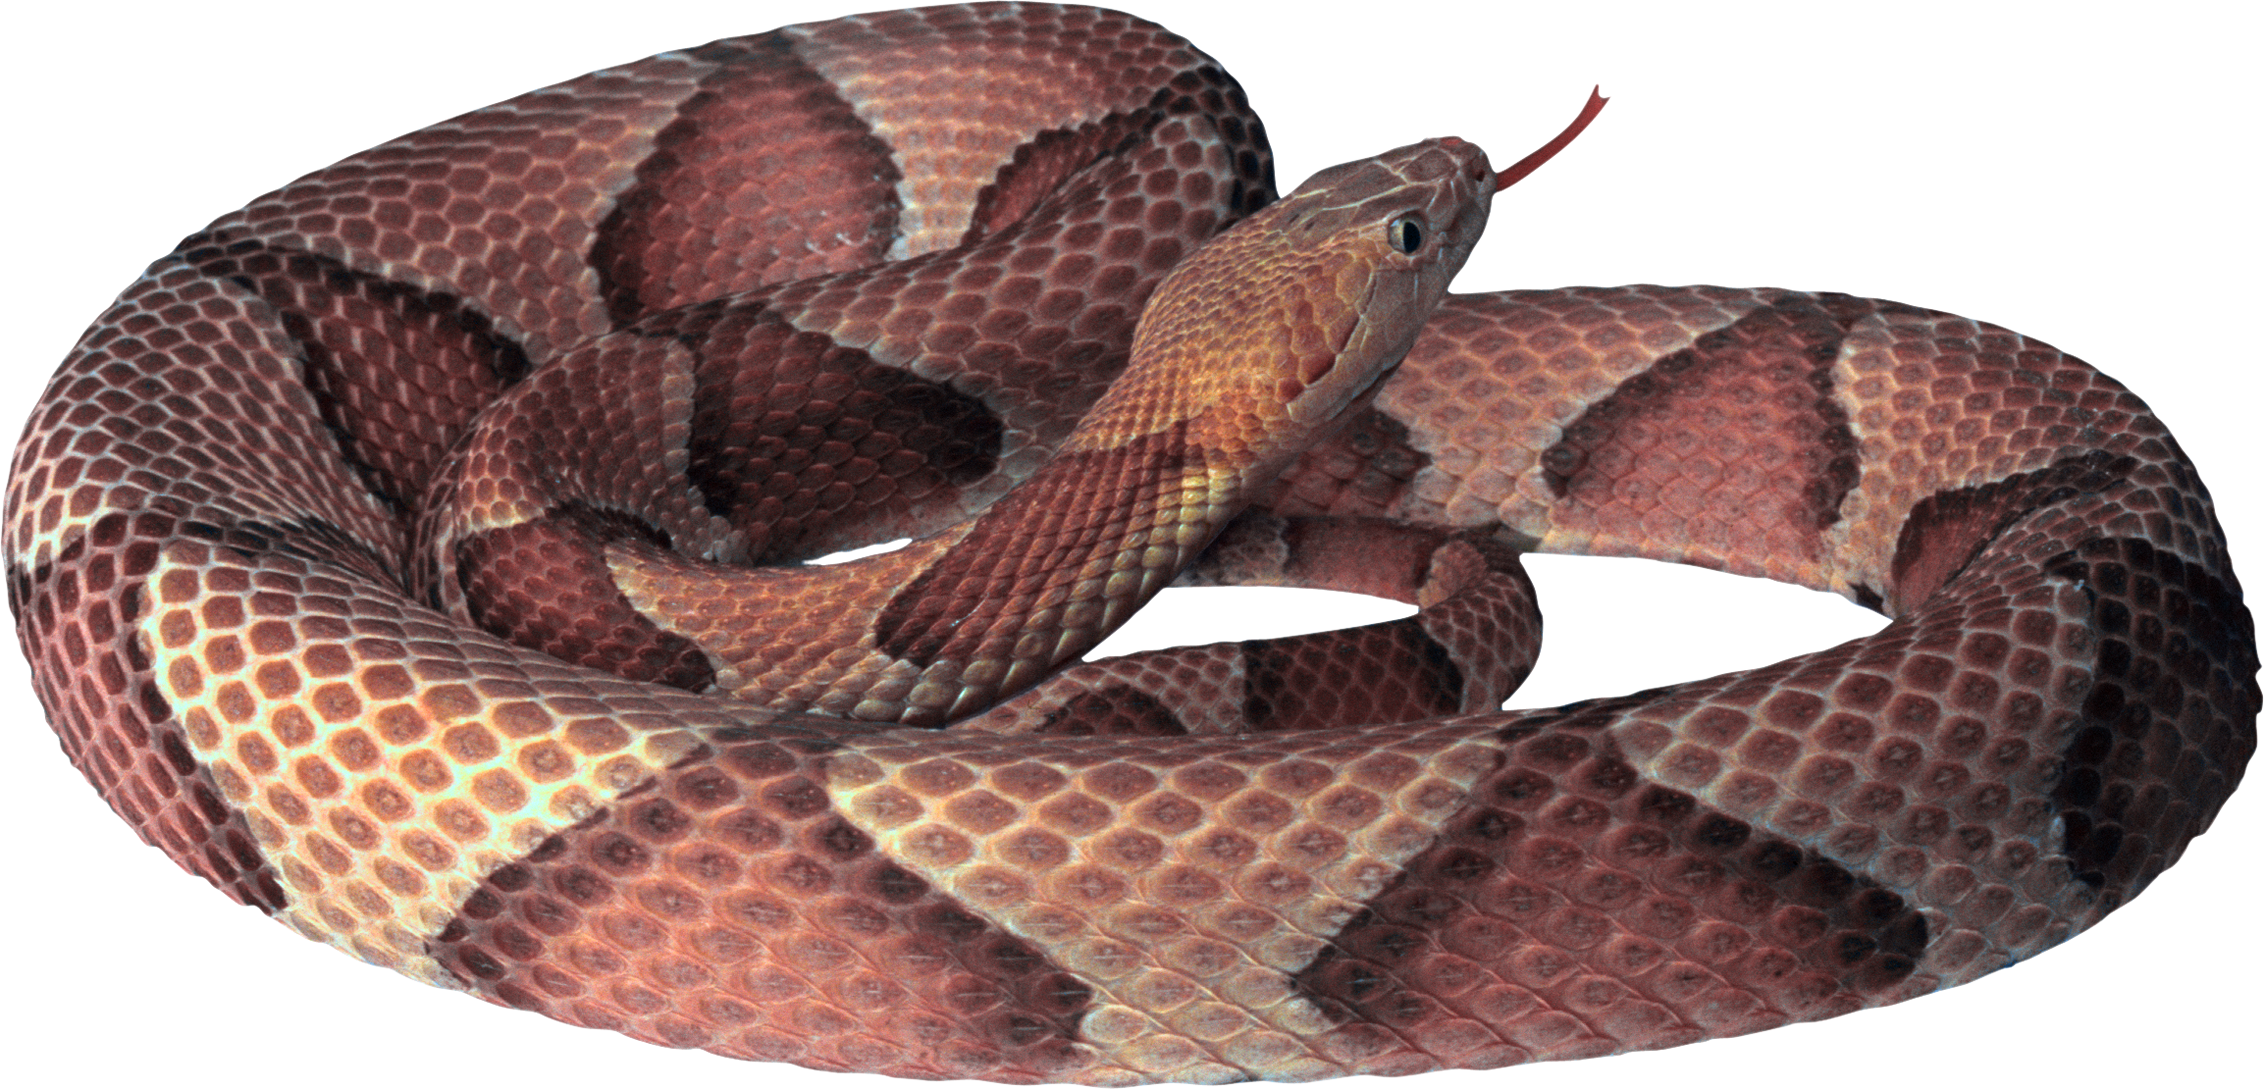 Diamondback Snake Transparant Beeld